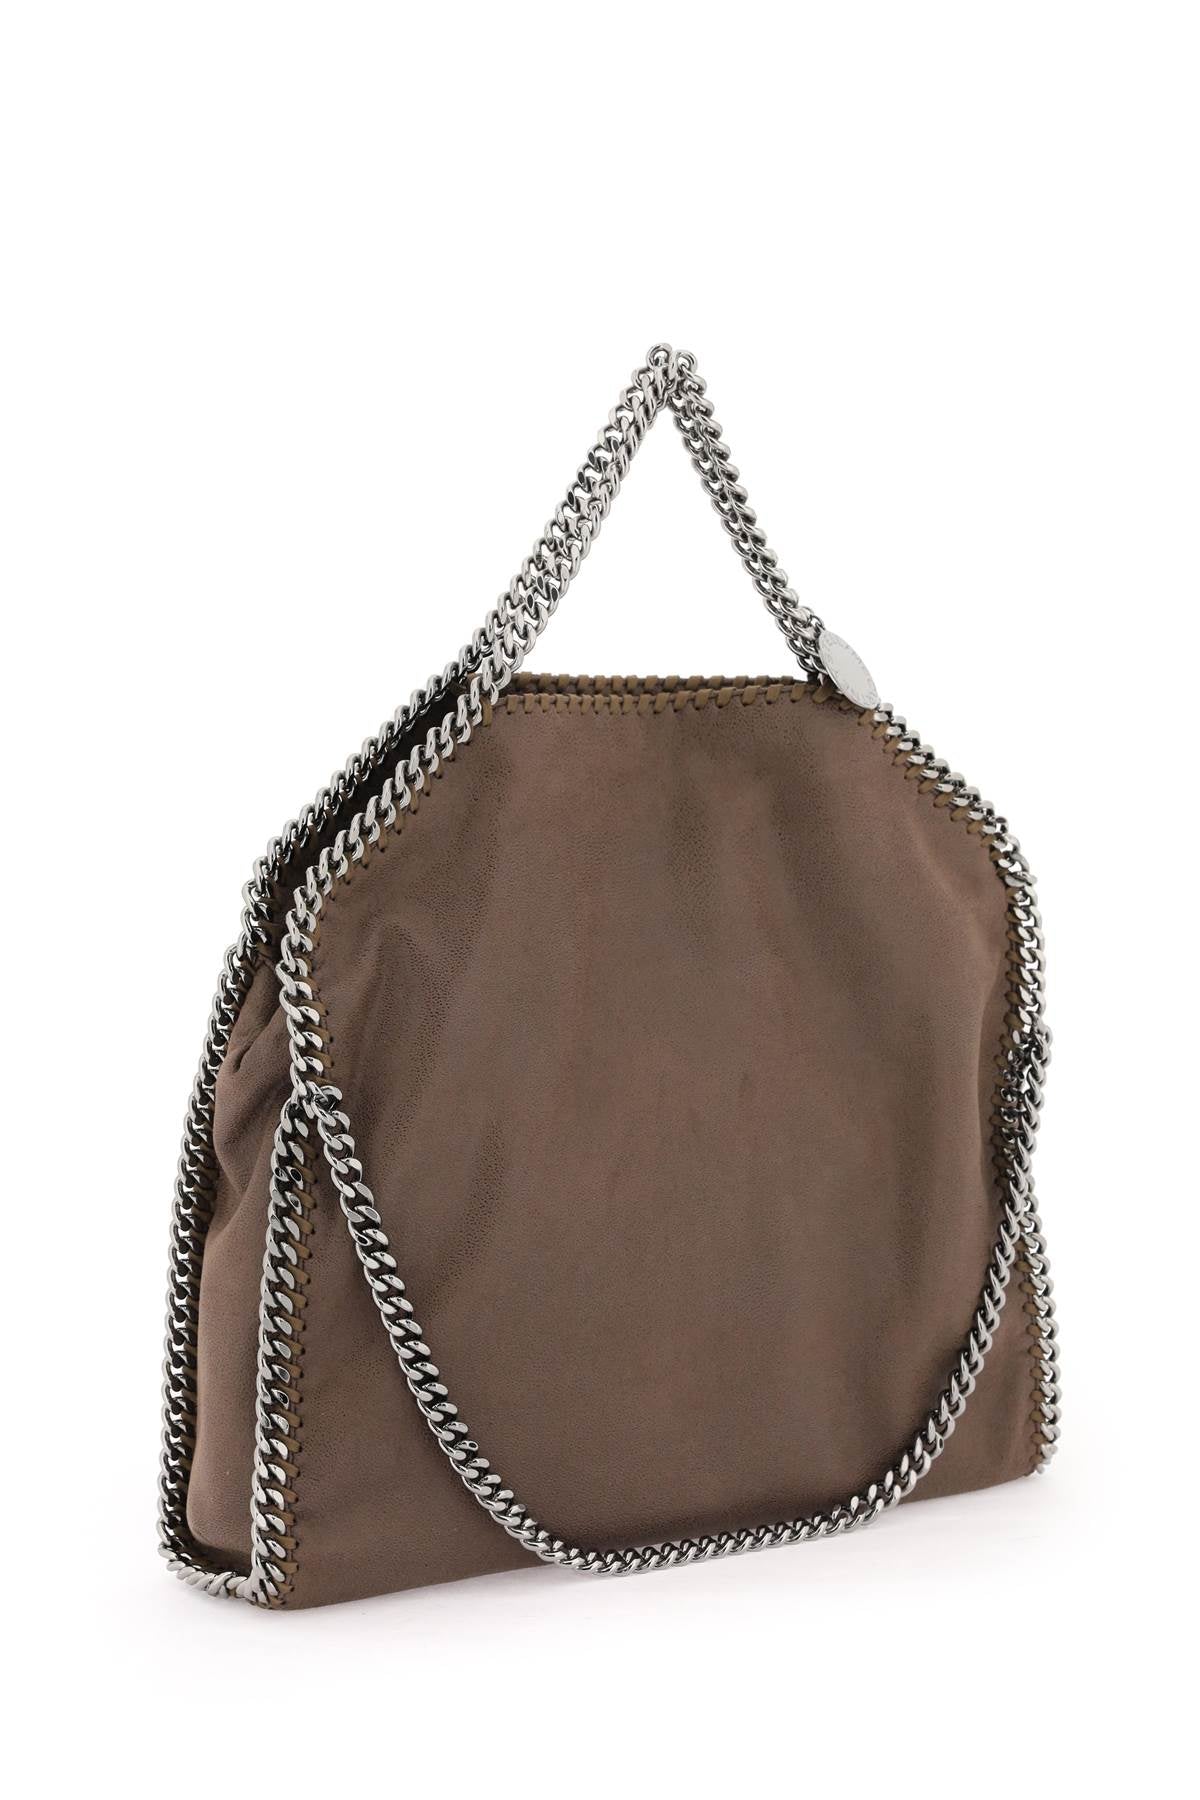 STELLA MCCARTNEY Fashionable Brown Shoulder Handbag for Women